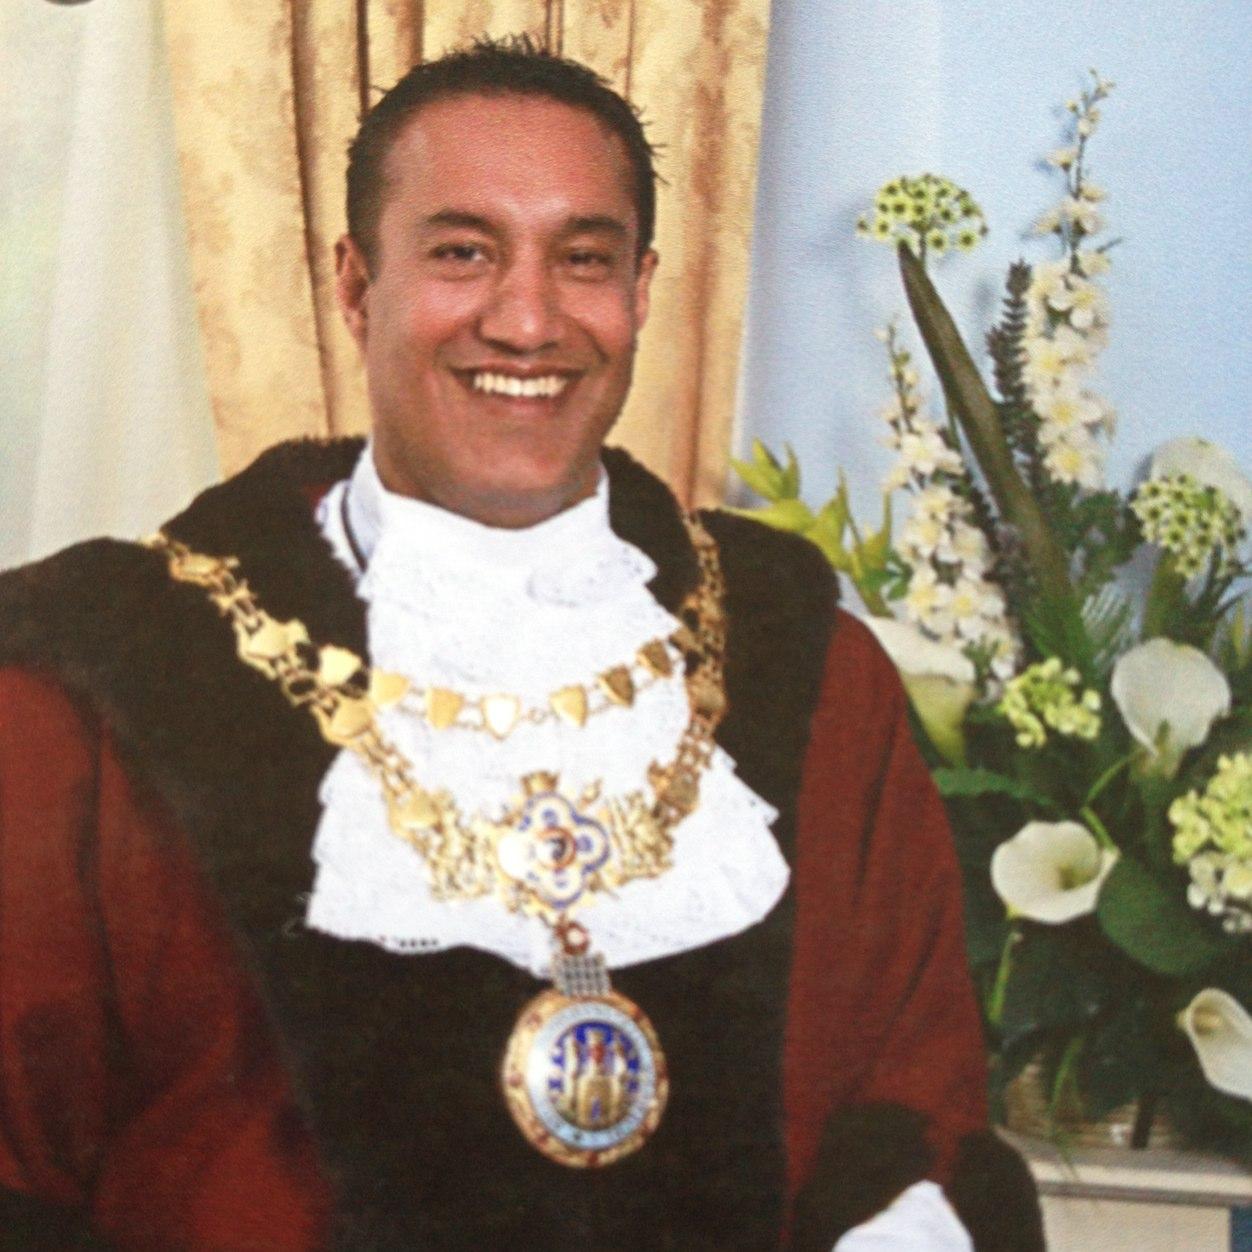 2007-15 Conservative Councillor Warwick. 2012-15 Mayor of Warwick Warwick 1100 yrs old Town & Royal Leamington Spa. Vote Bob on 12th Dec 2019